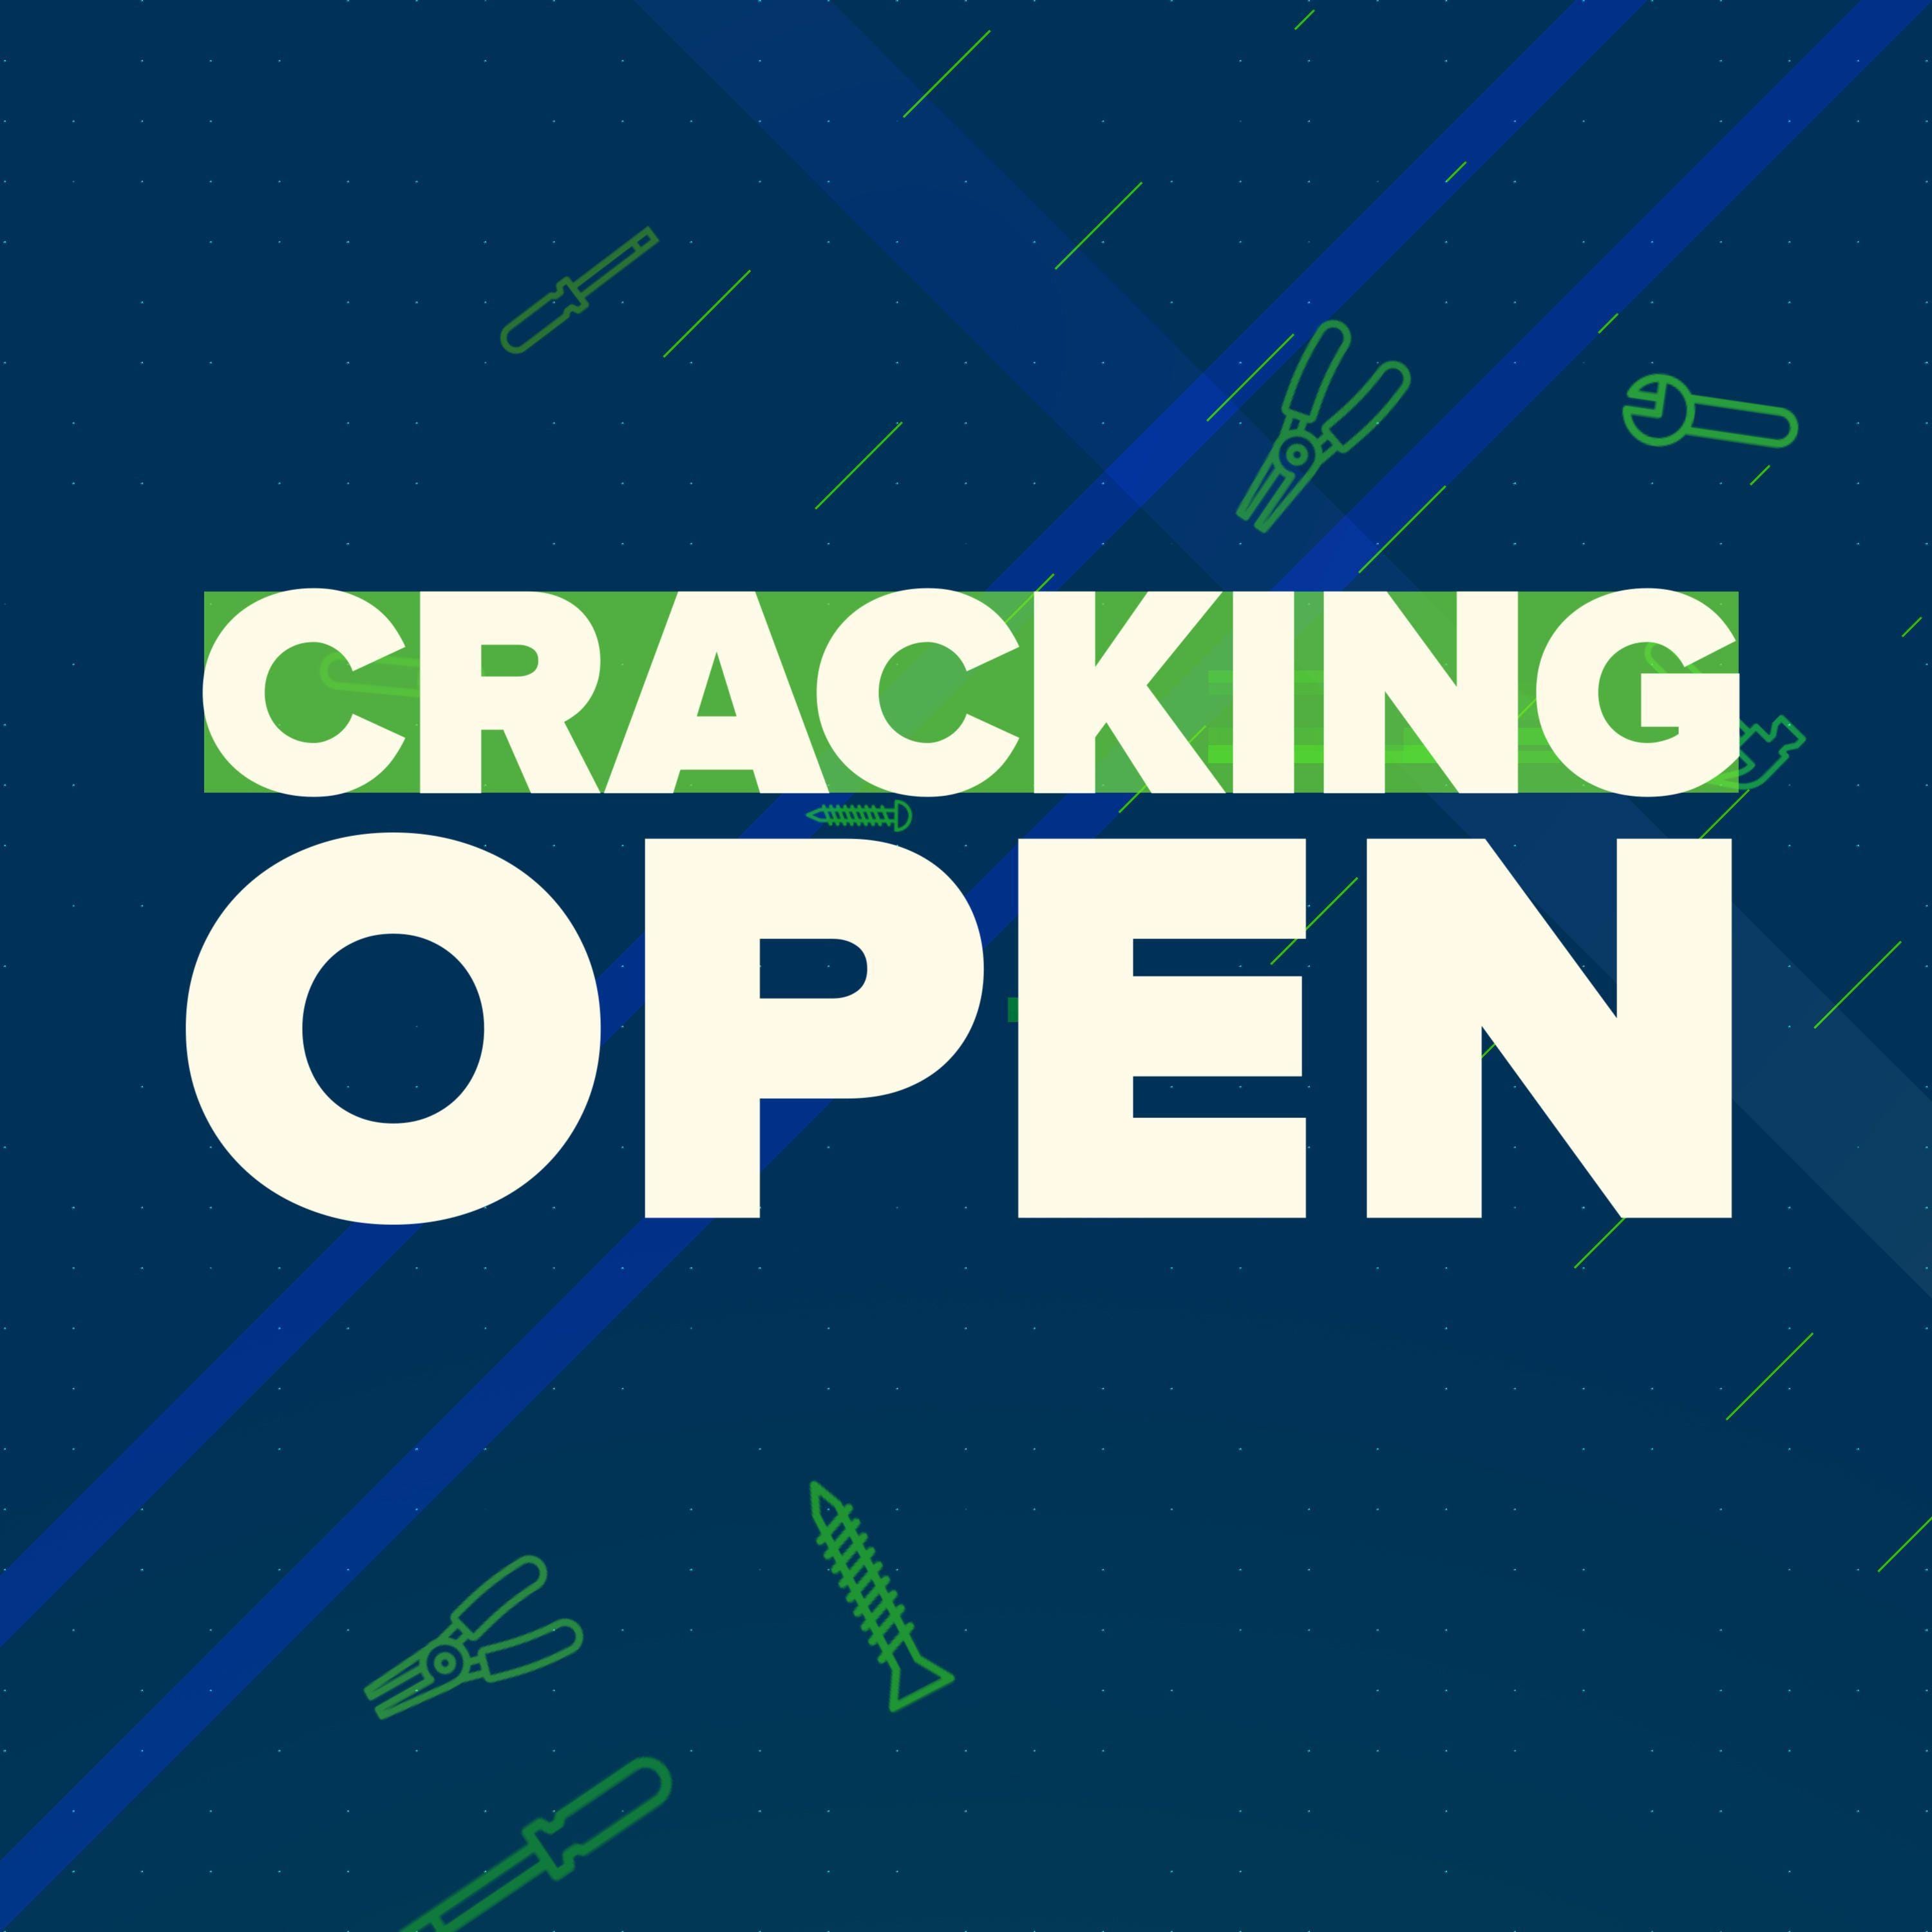 Cracking Open (video)